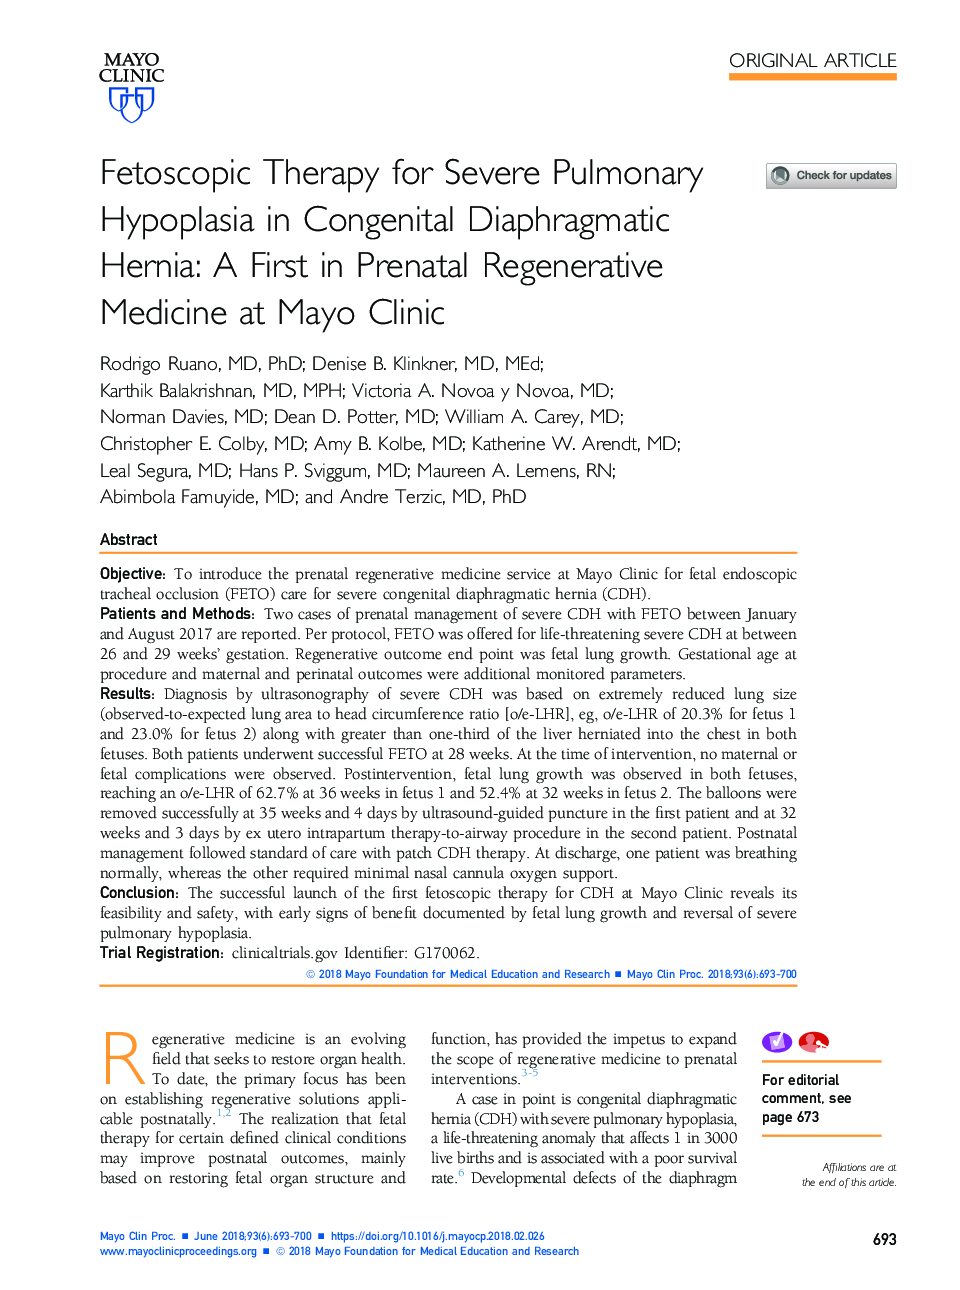 Fetoscopic Therapy for Severe Pulmonary Hypoplasia in Congenital Diaphragmatic Hernia: A First in Prenatal Regenerative Medicine at Mayo Clinic